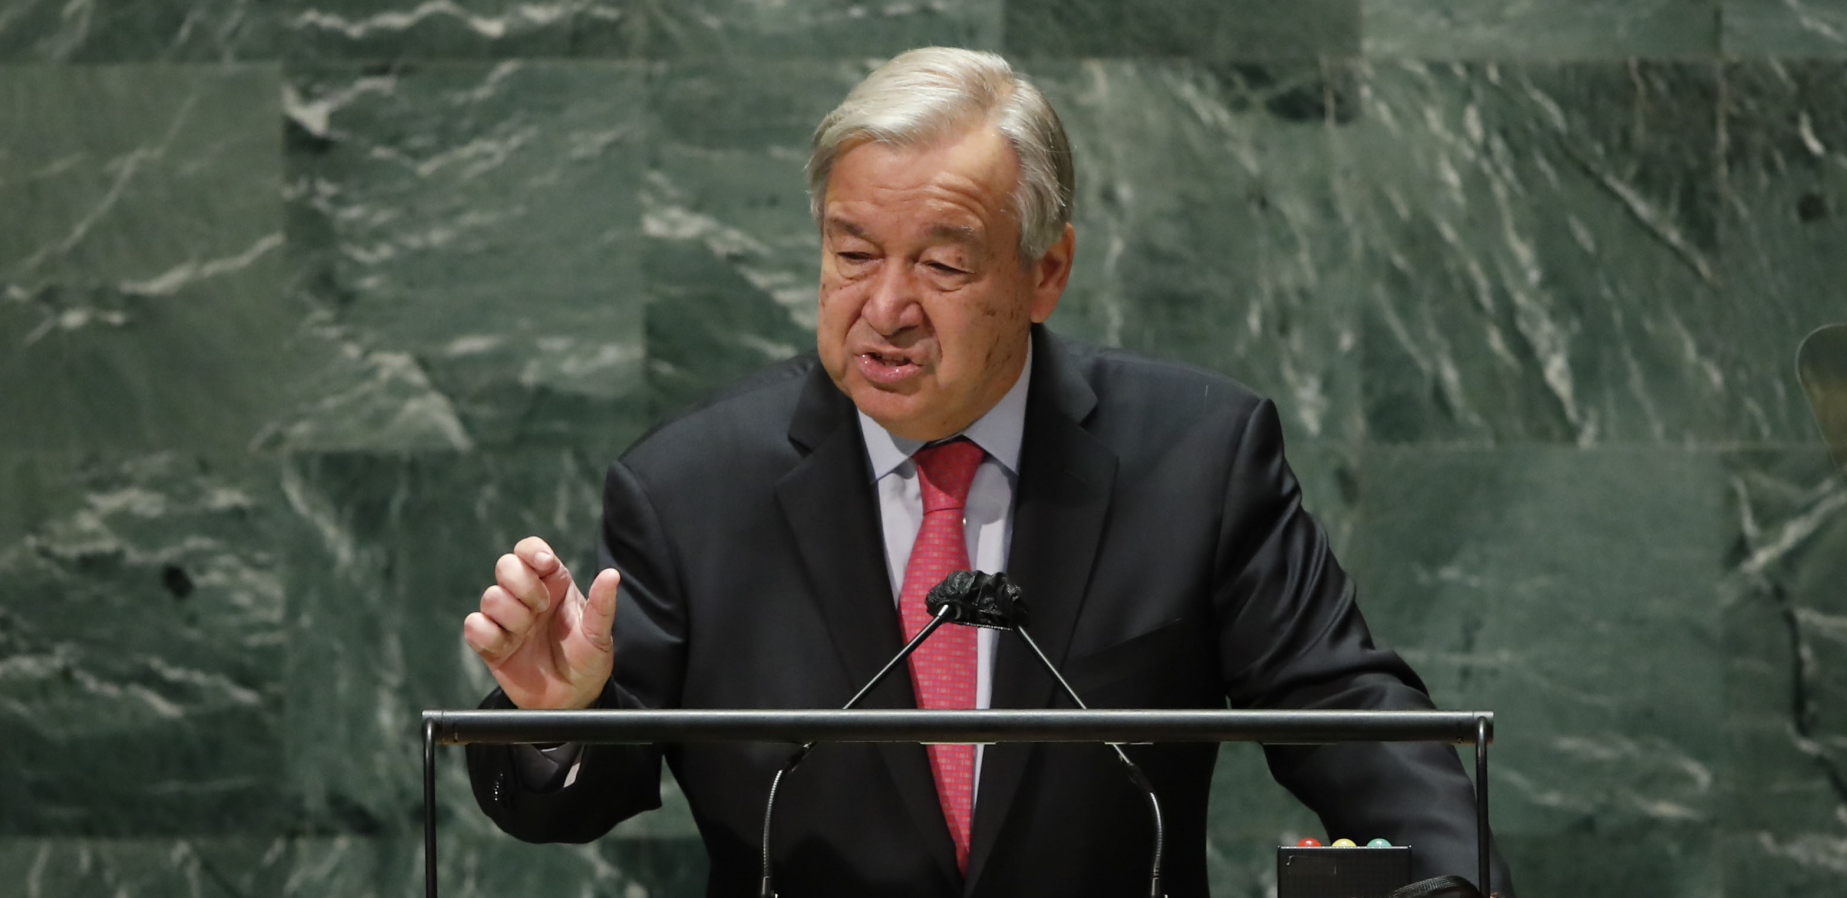 NIJE ZADOVOLJAN Gutereš snažnim rečima udario na Savet bezbednosti Ujedinjenih nacija